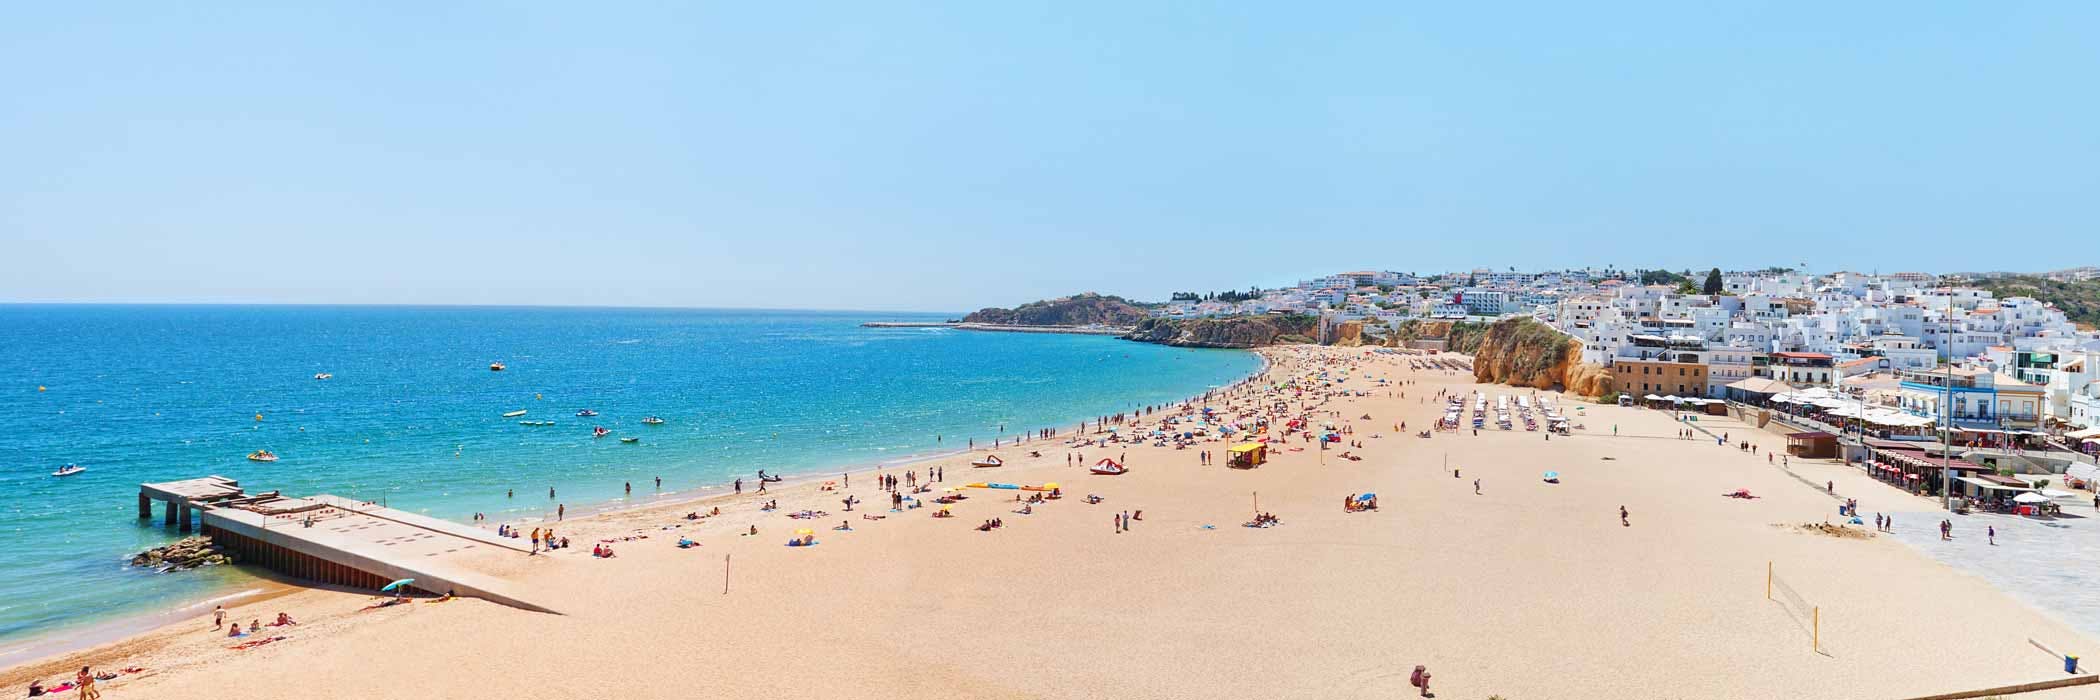 Algarve Holidays under £200